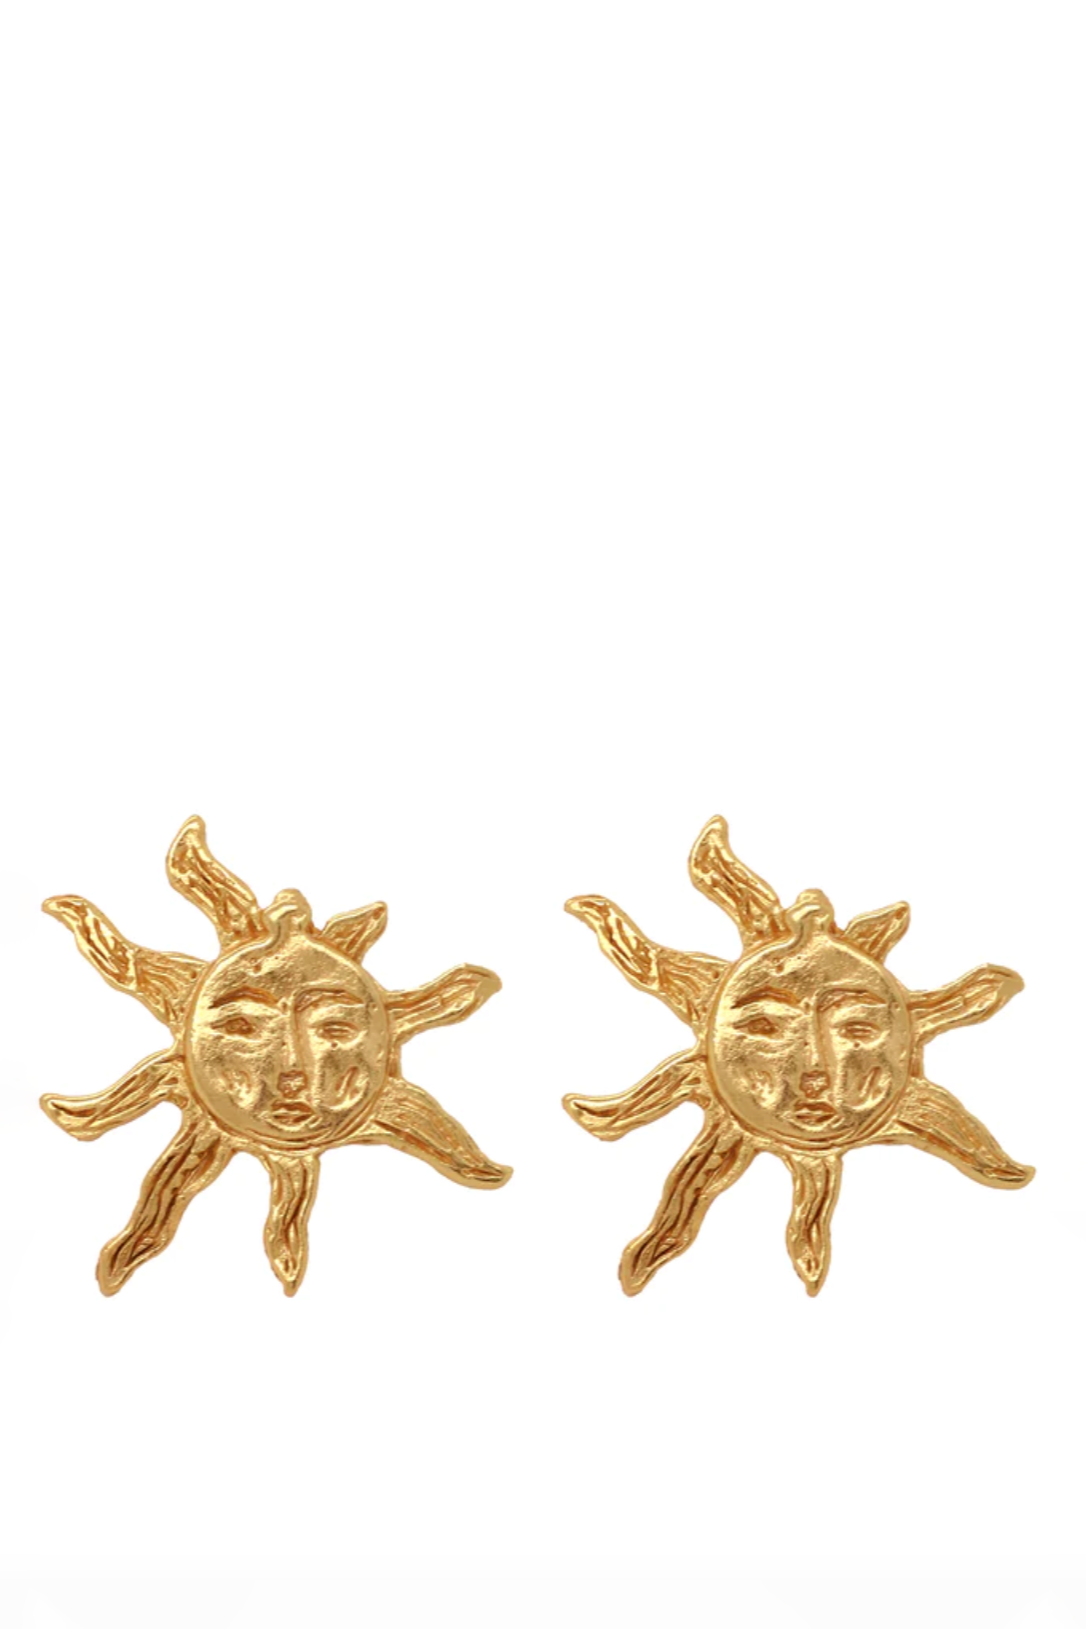 Cleopatra's Bling | Mini Apollo Sun Earrings - Gold